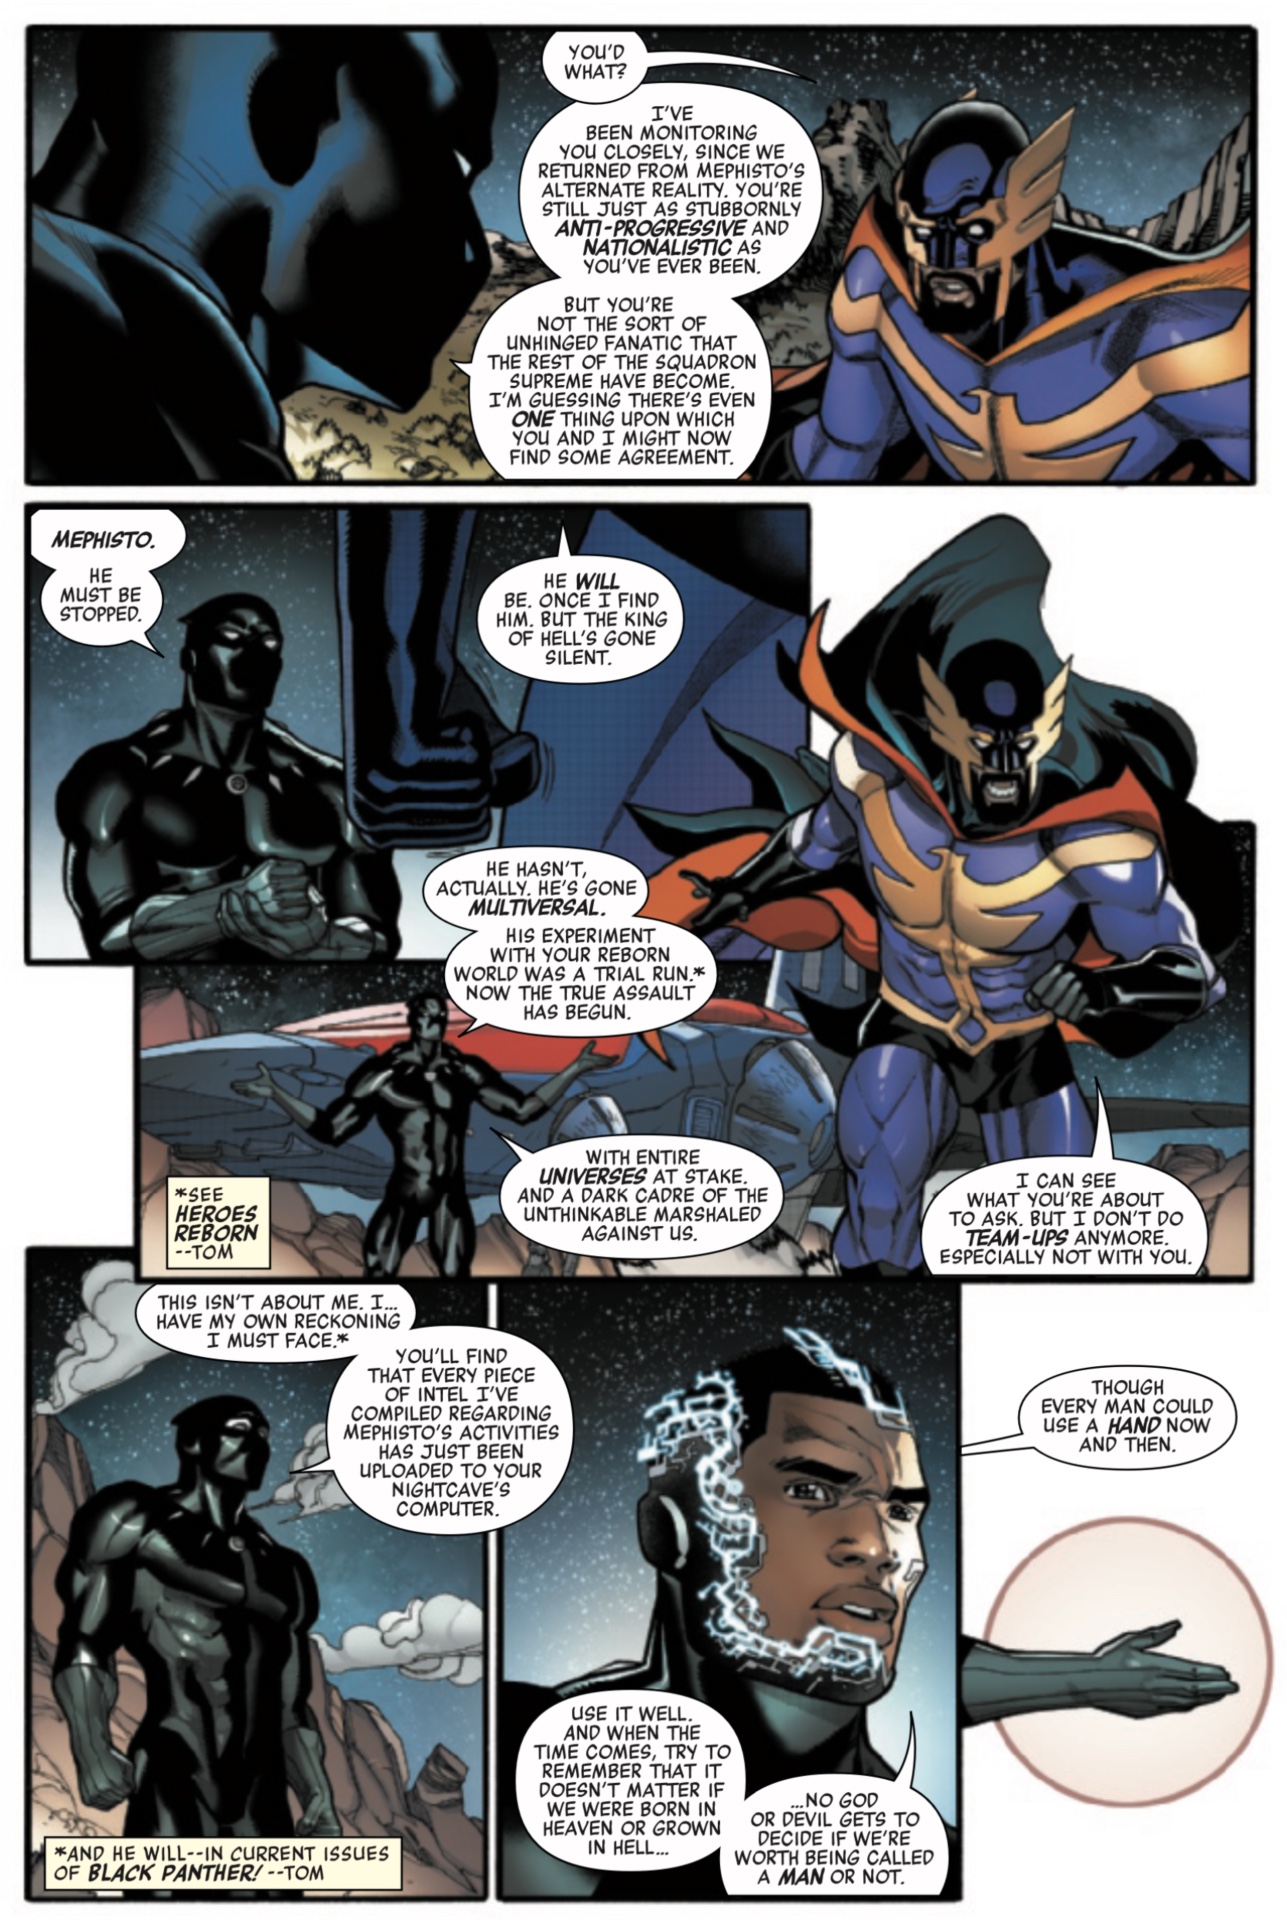 Nighthawk - 'Marvel's Batman' - joins the Avengers | GamesRadar+